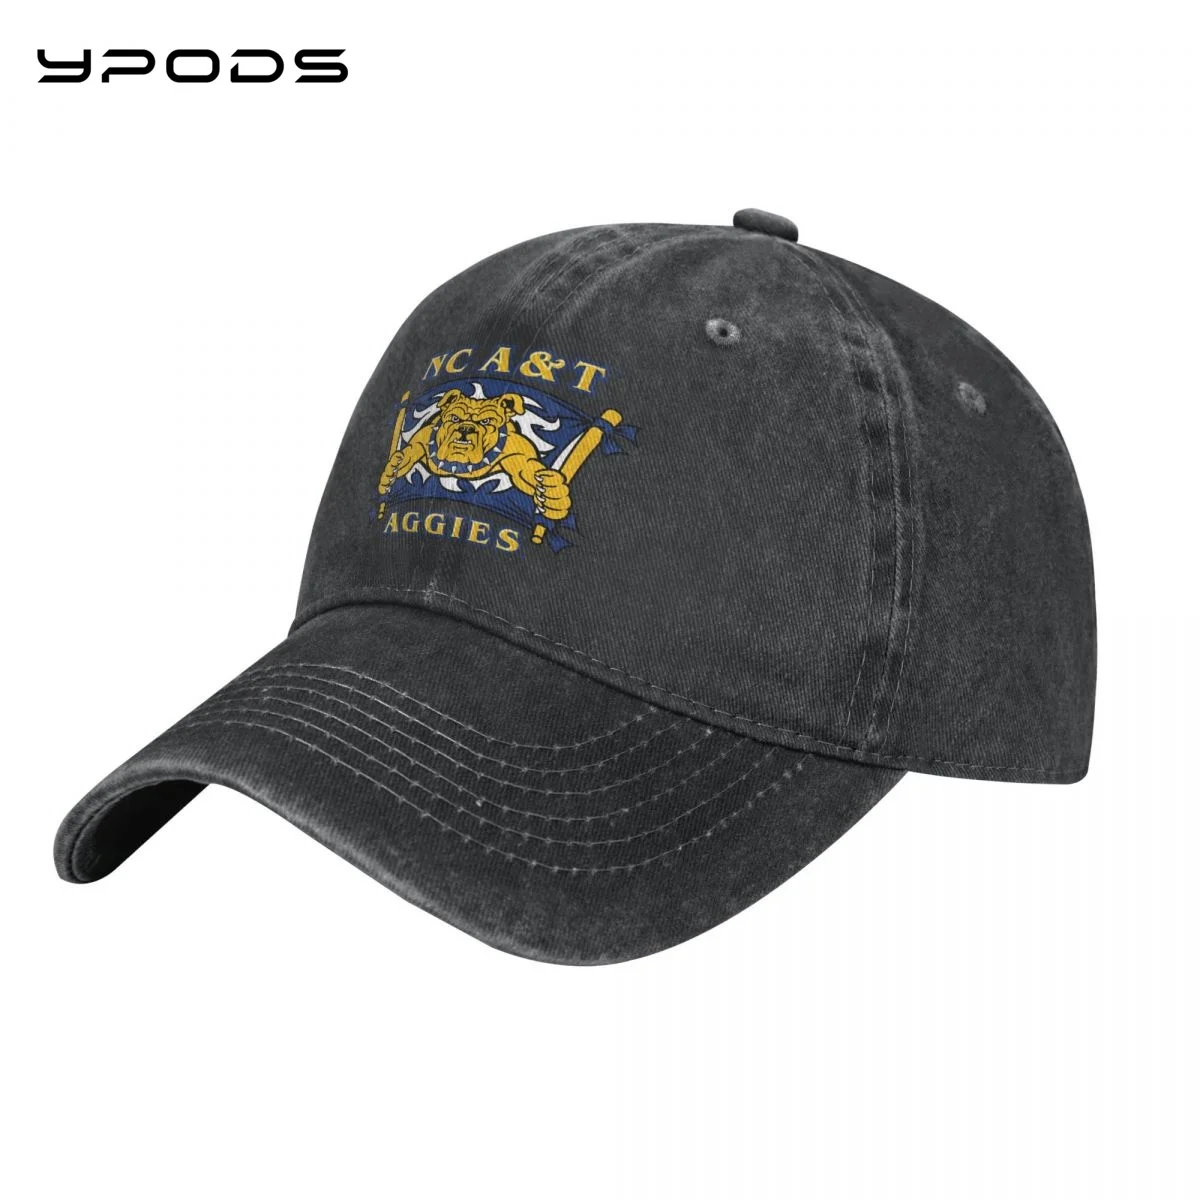 

Nc North Carolina A & T State University Aggies Vintage Baseball Cap Washable Cotton Adjustable Cap Hats For Men